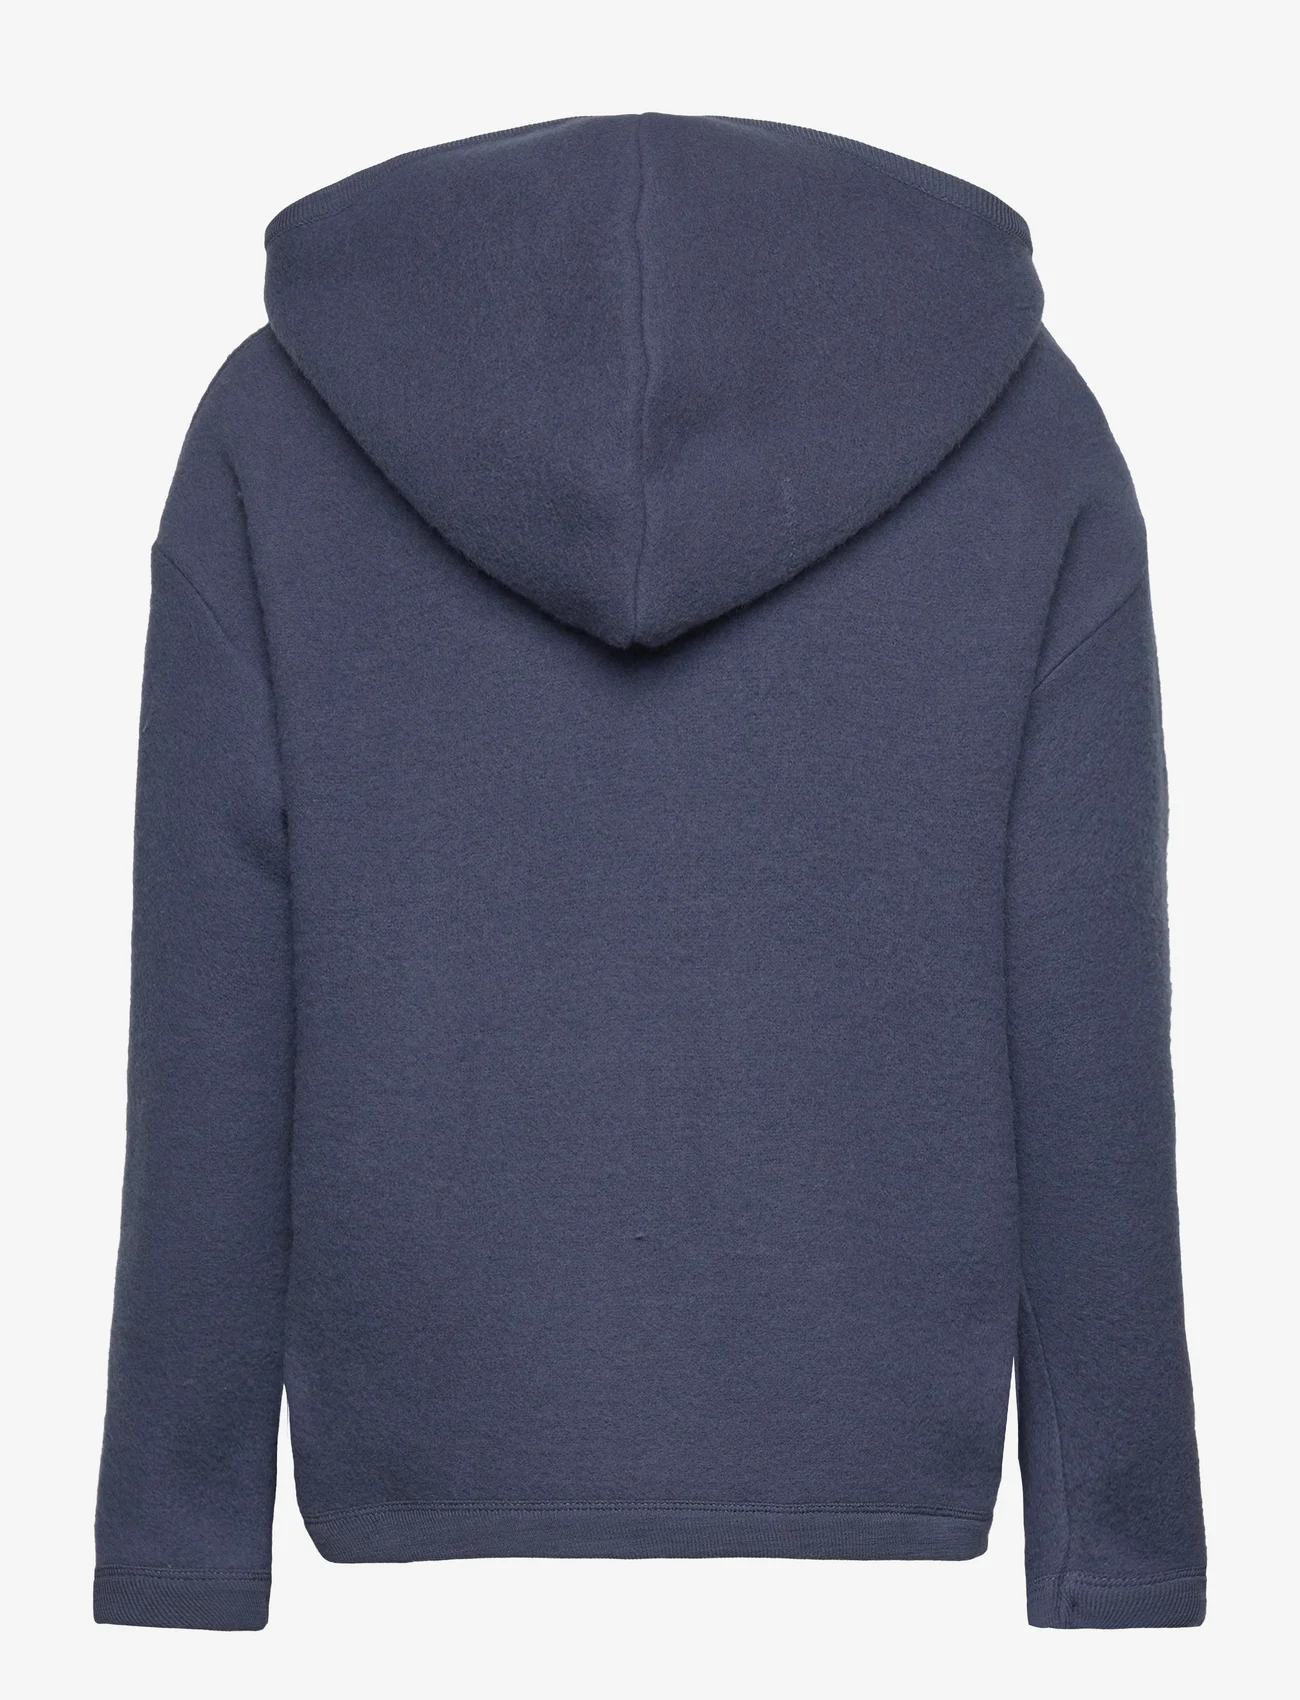 Müsli by Green Cotton - Woolly fleece hoodie - huvtröjor - night blue - 1